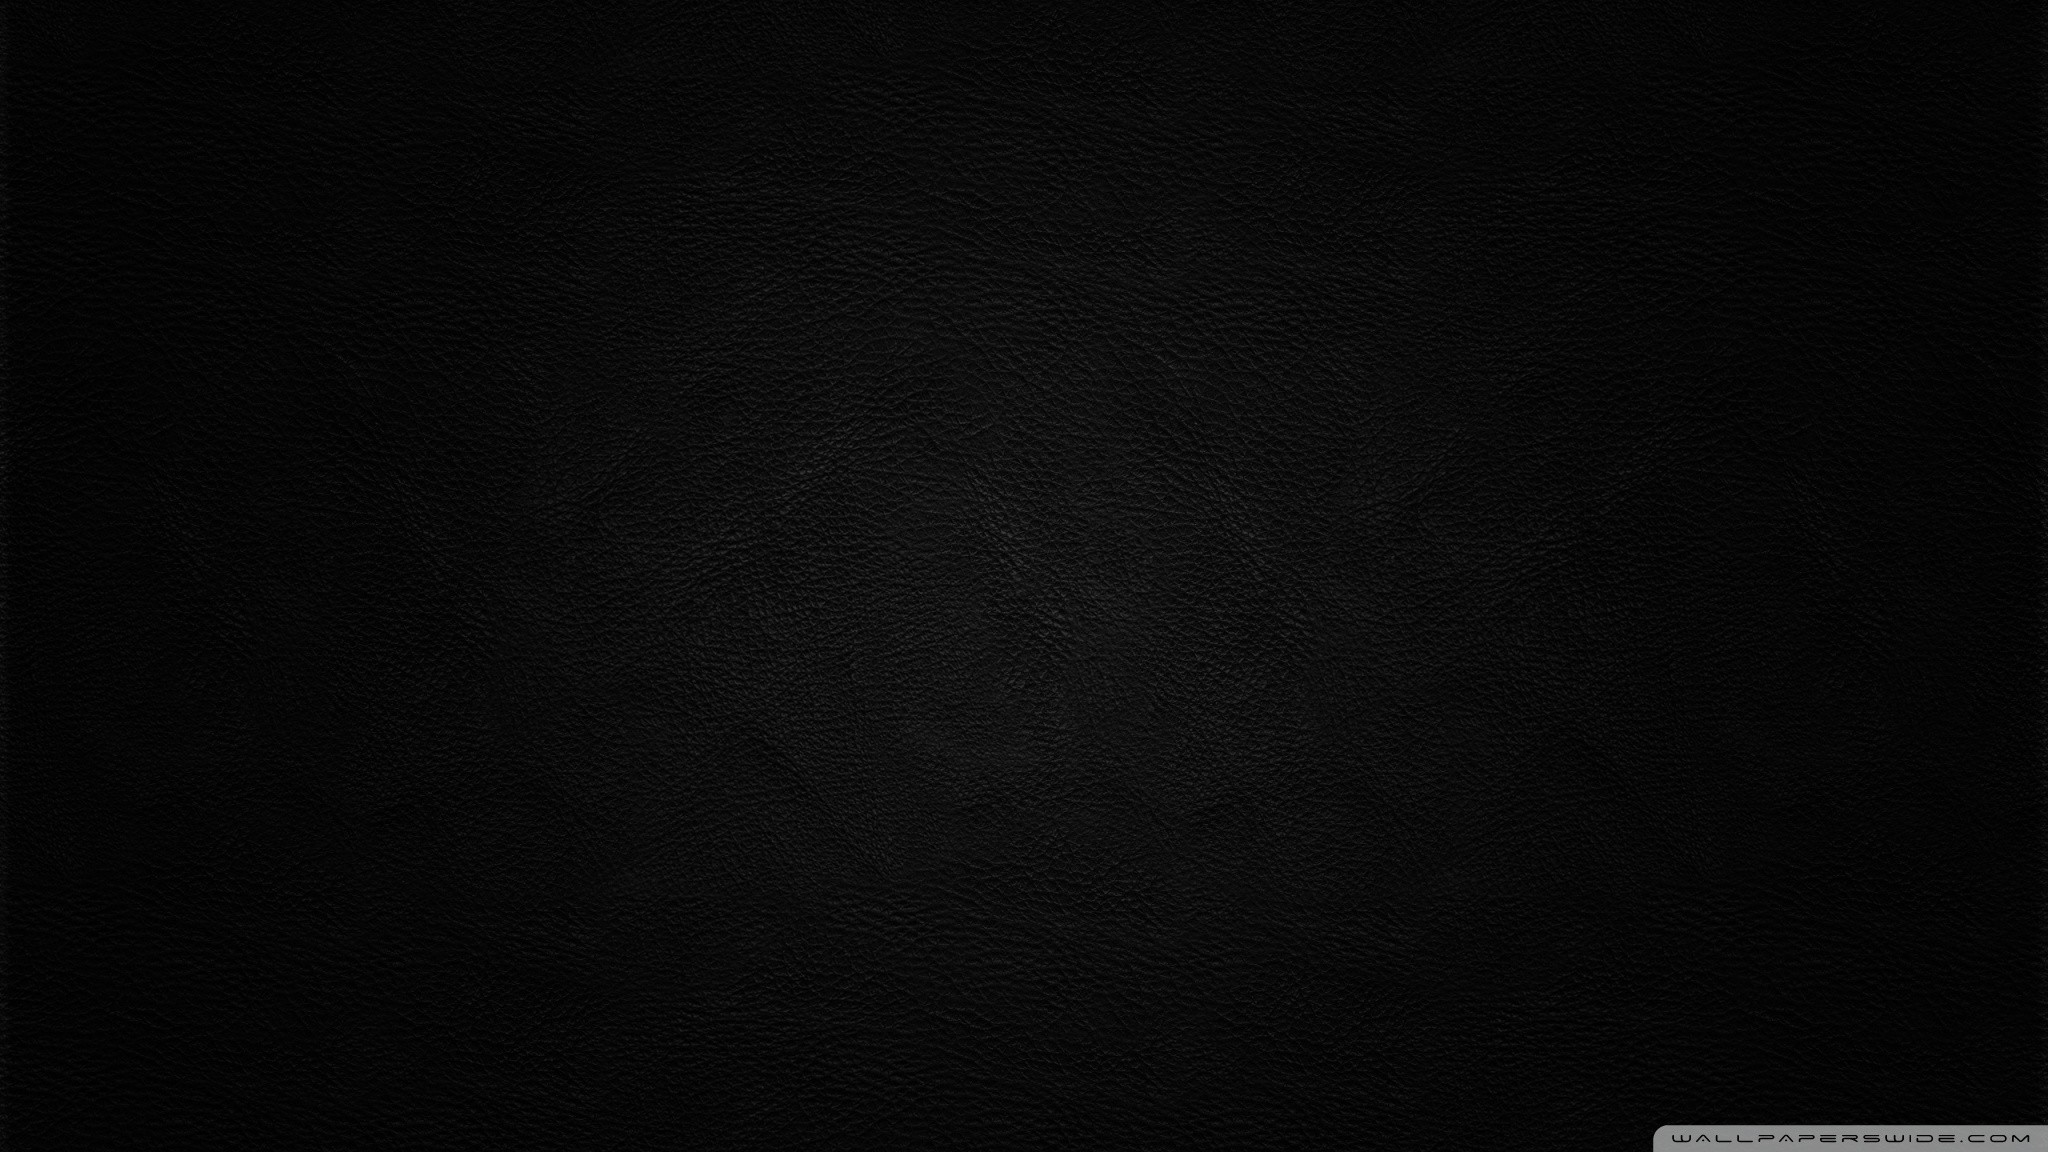 2048x1152 black_background_leather-wallpaper-.jpg - Digital Marketing by  Chris Salazar